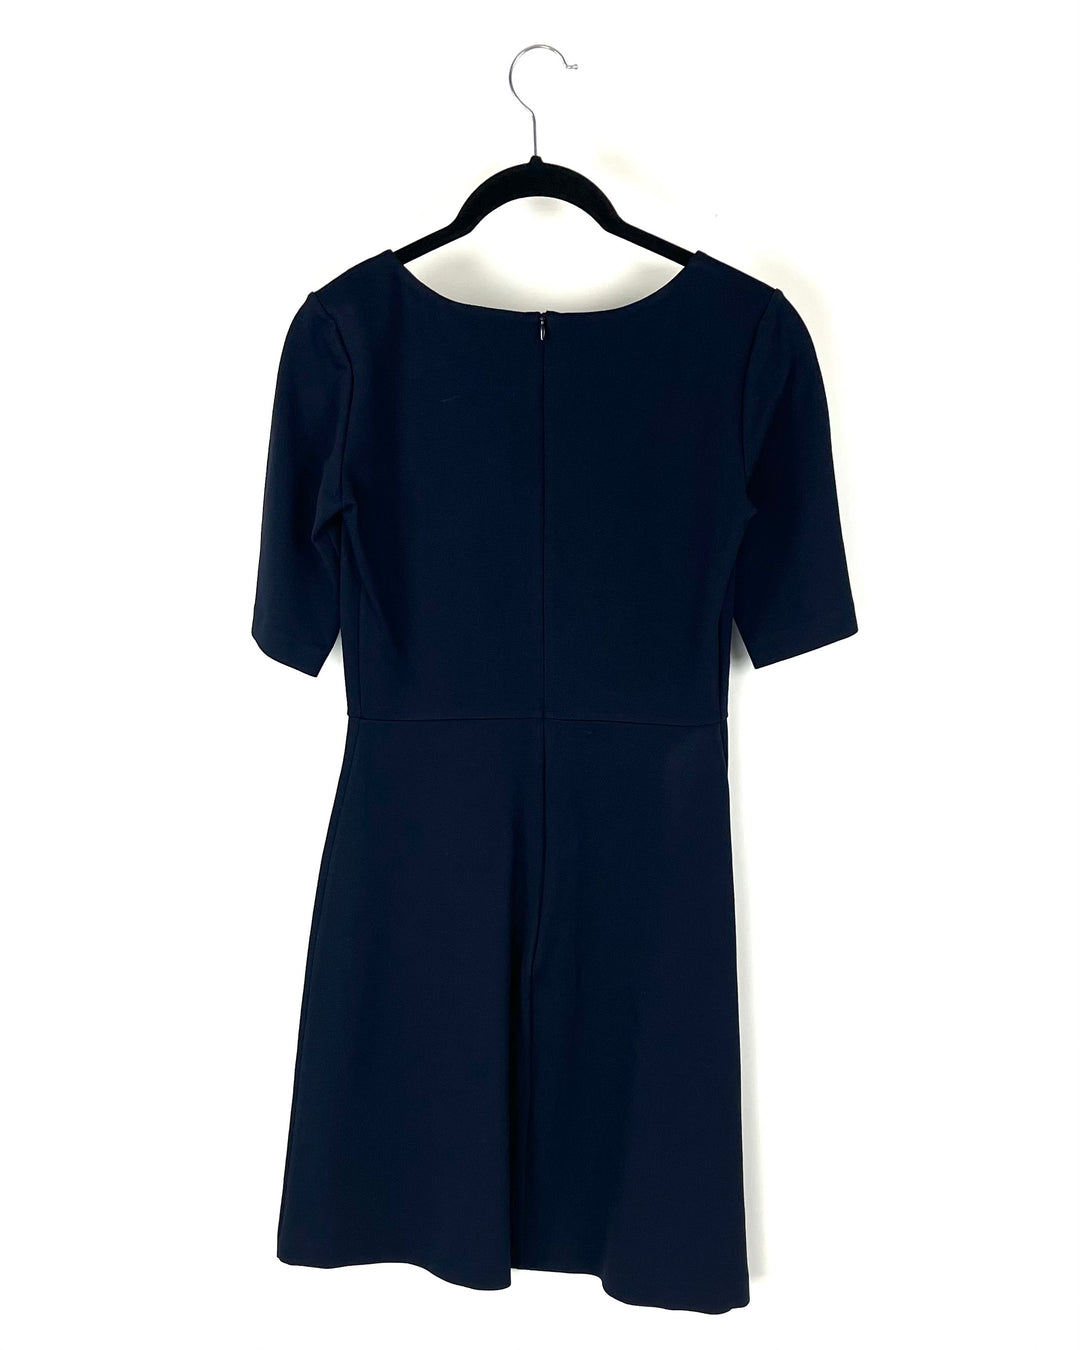 Short Sleeve Navy Blue Dress - Size 4/6